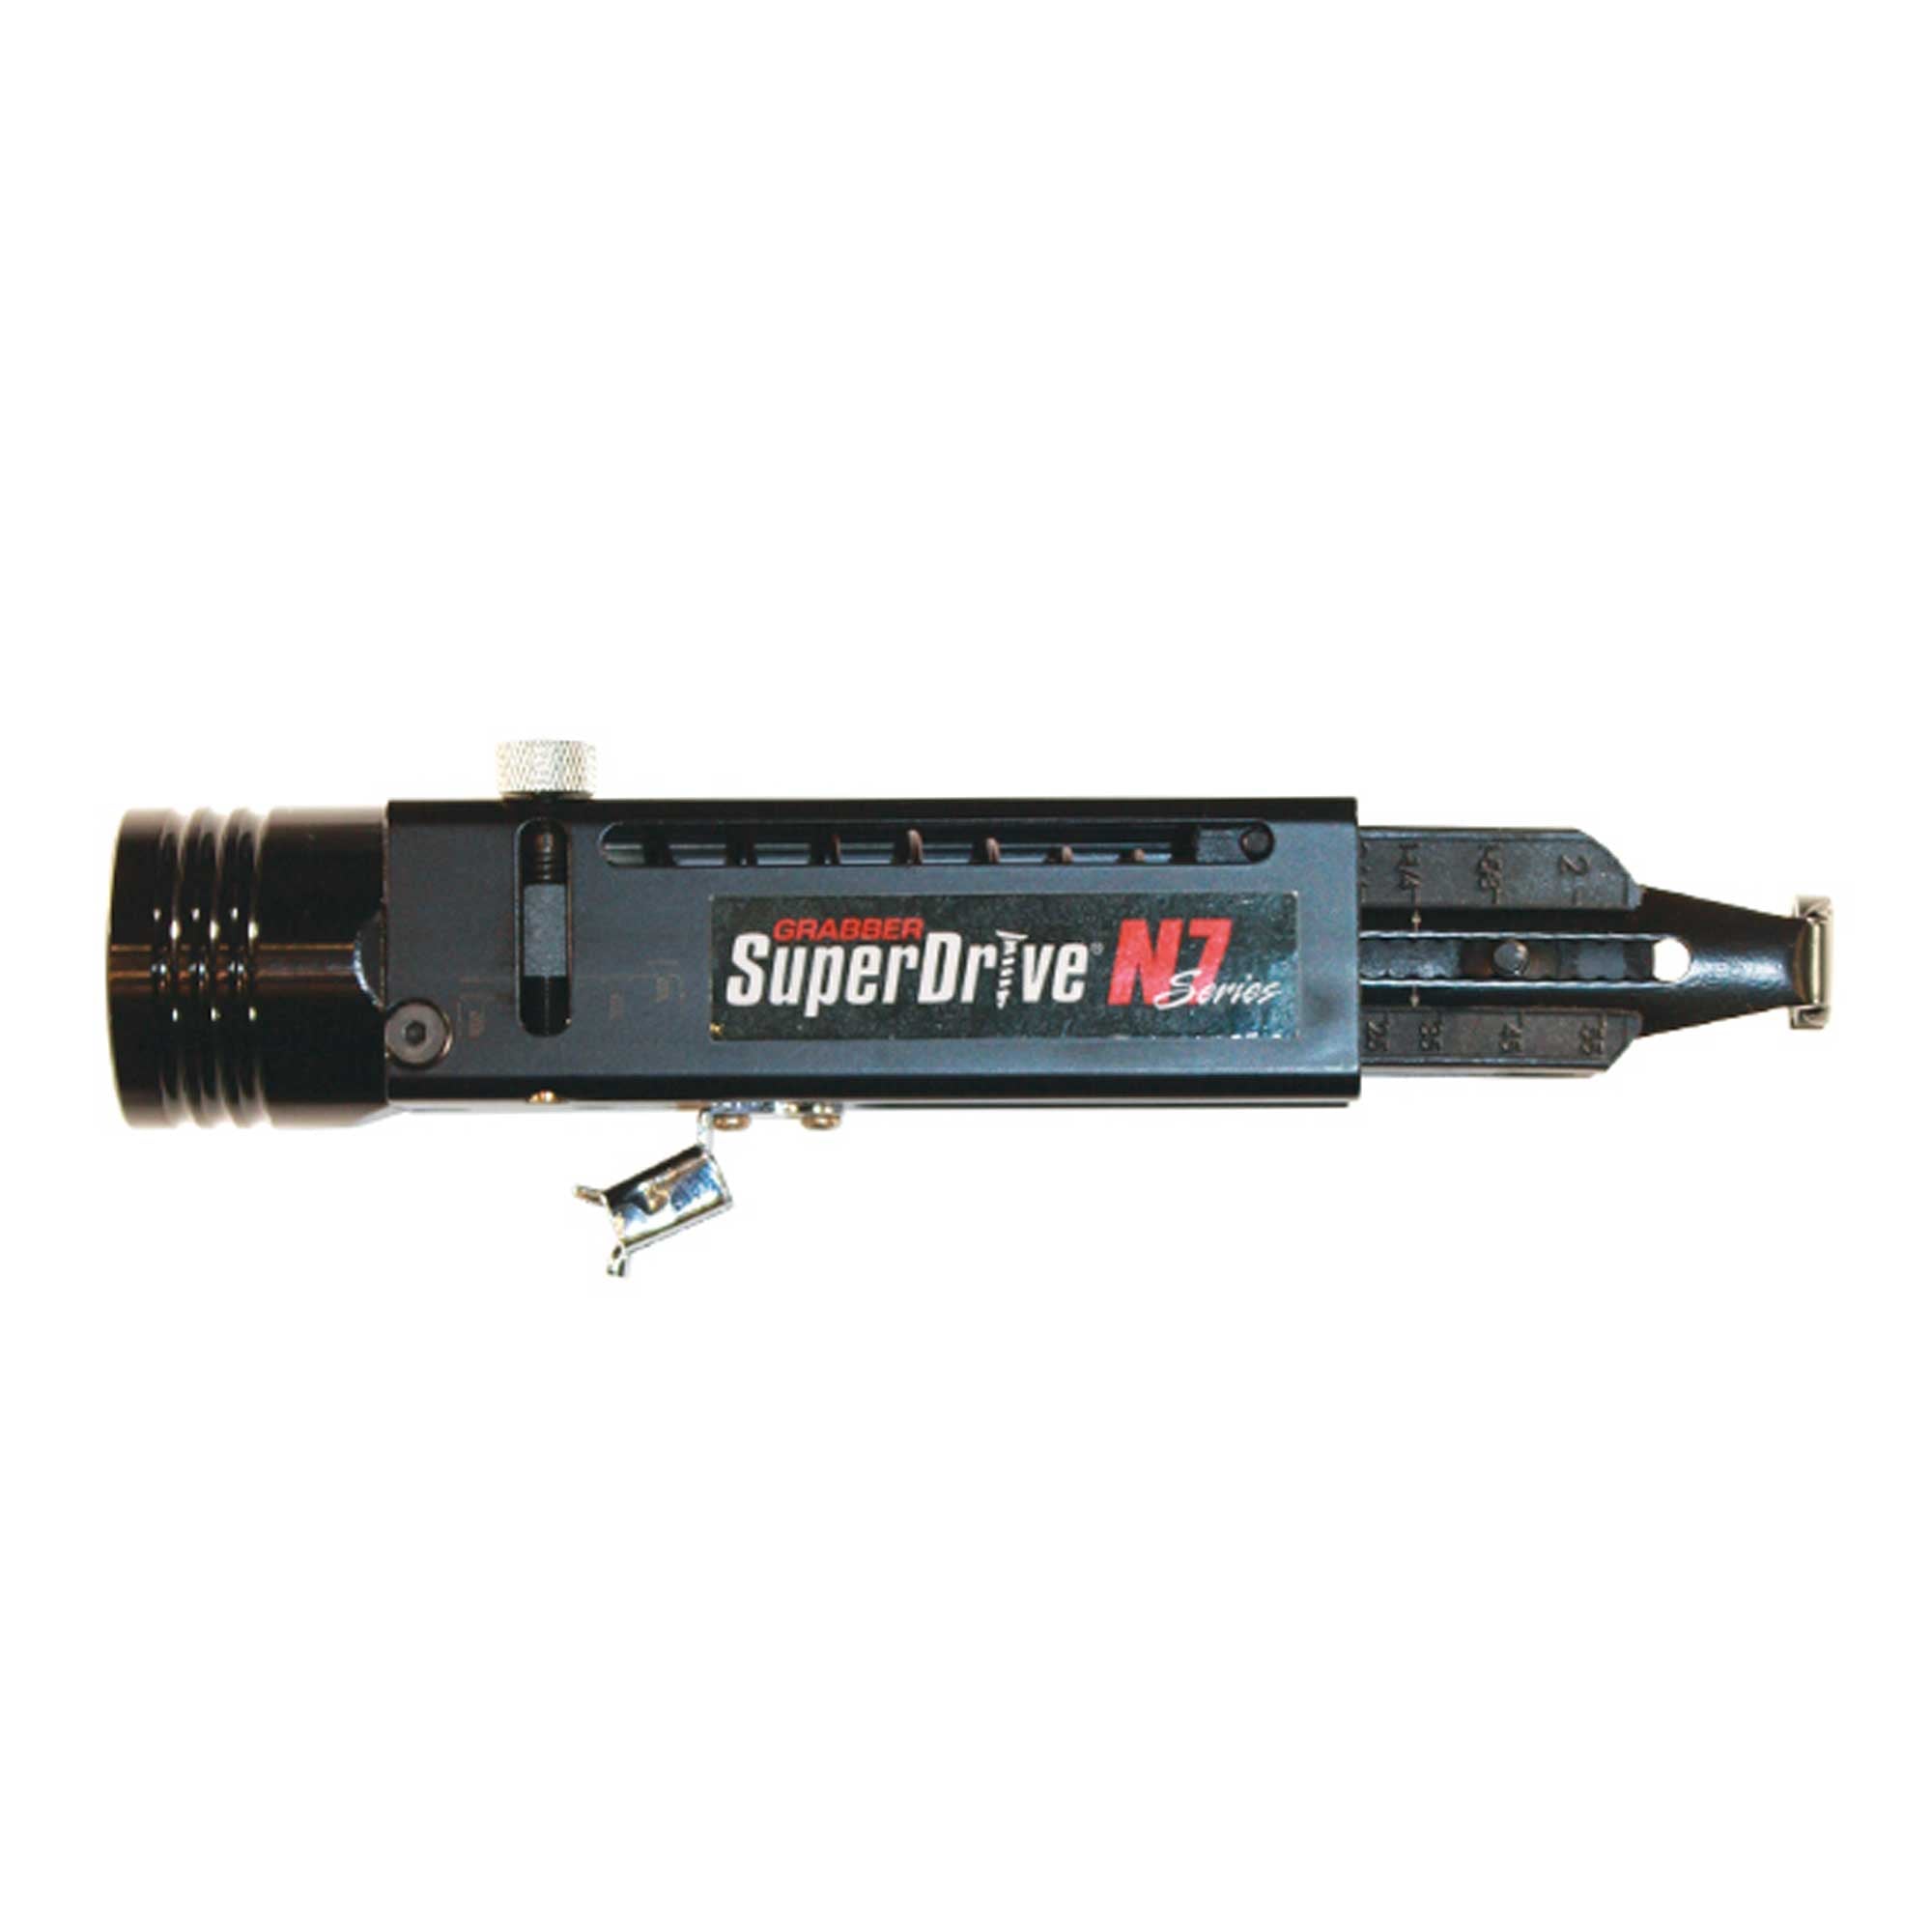 Grabber Superdrive N7 Assemblage Attachement